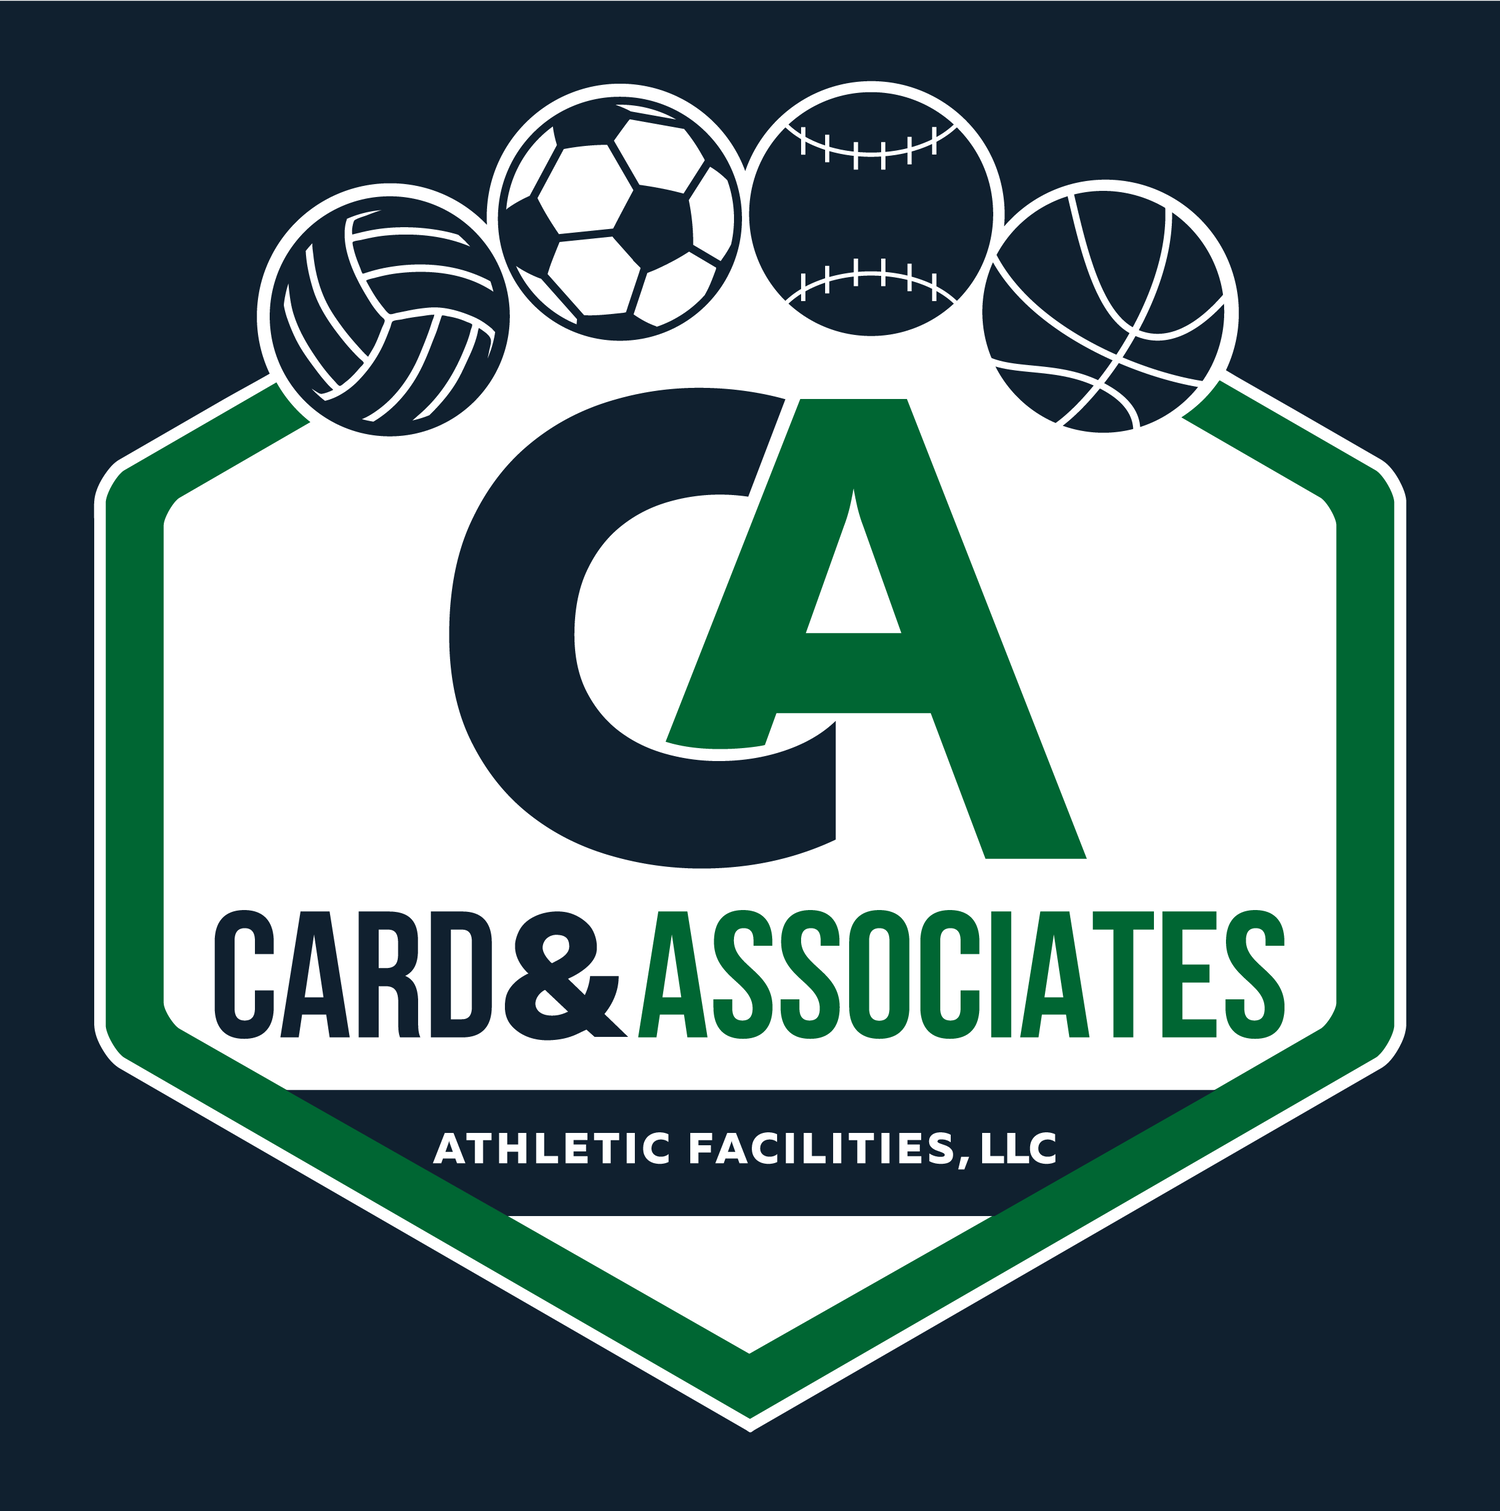 Card & Associates Athletic Facilities